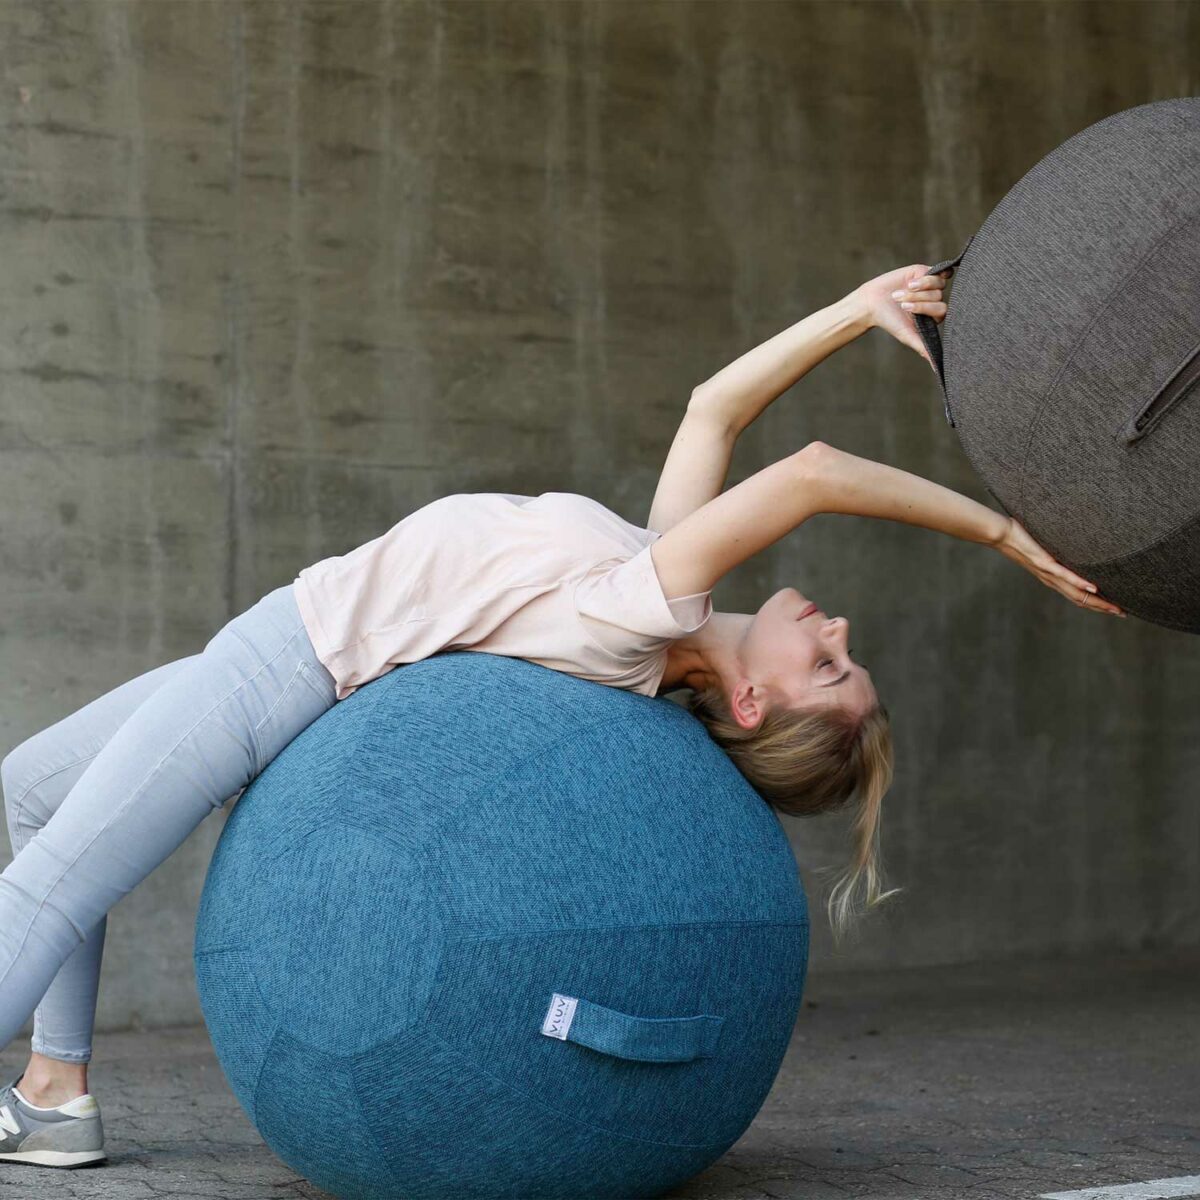 vluv STOV fabric seating ball